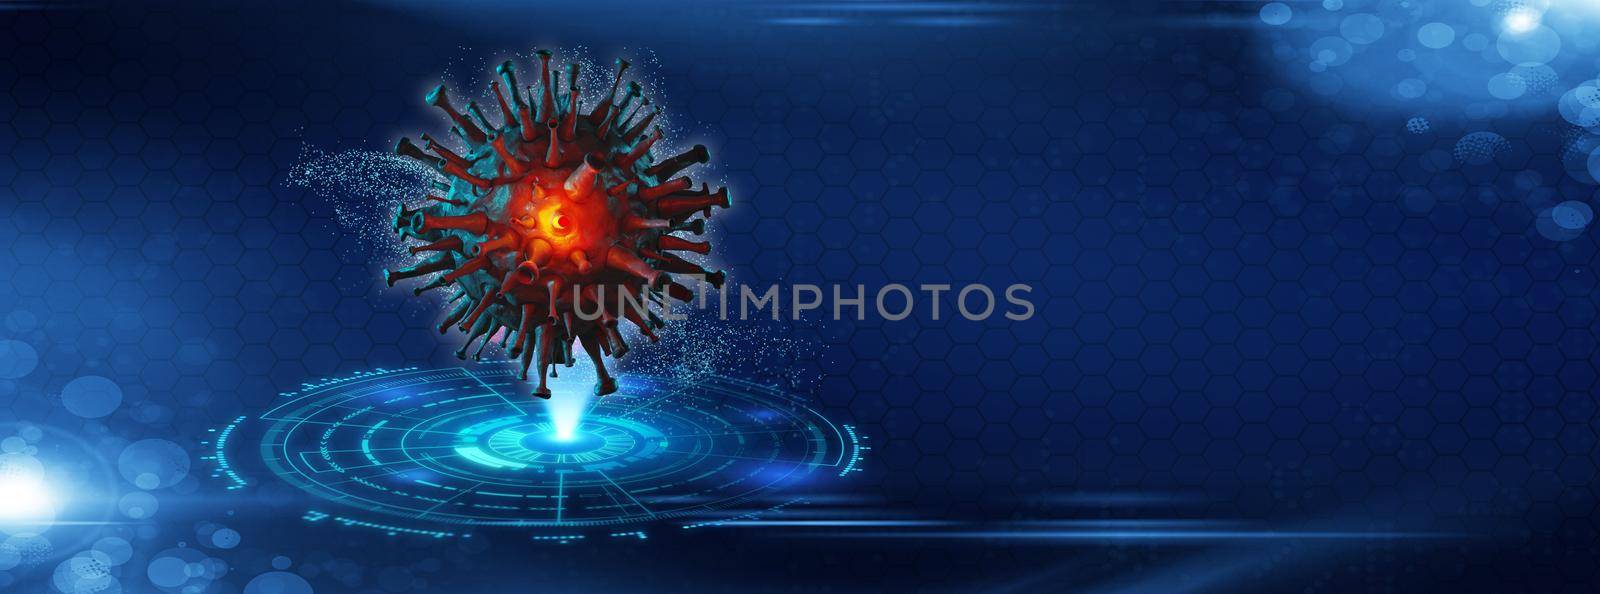 Stop coronavirus and quarantine concept. 3D medical illustration